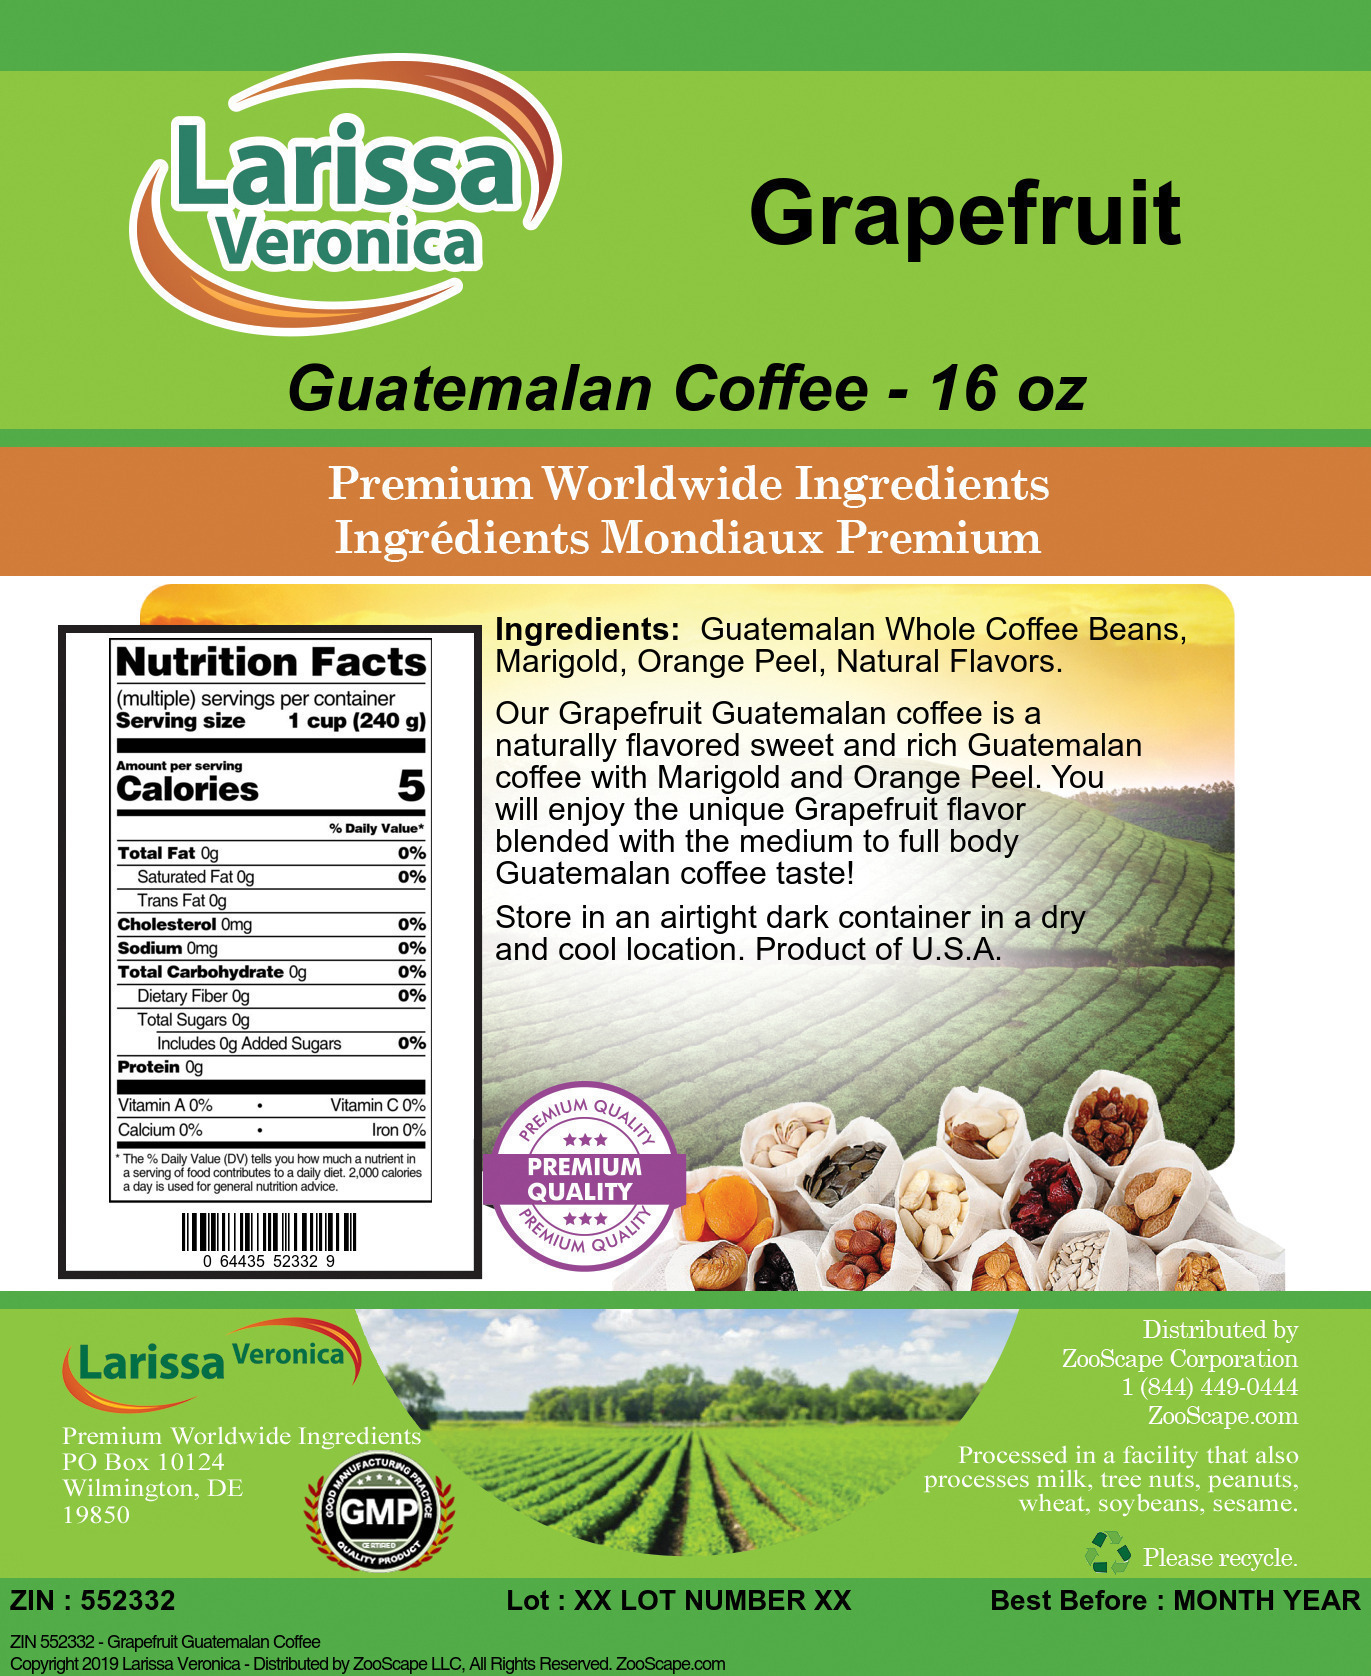 Grapefruit Guatemalan Coffee - Label